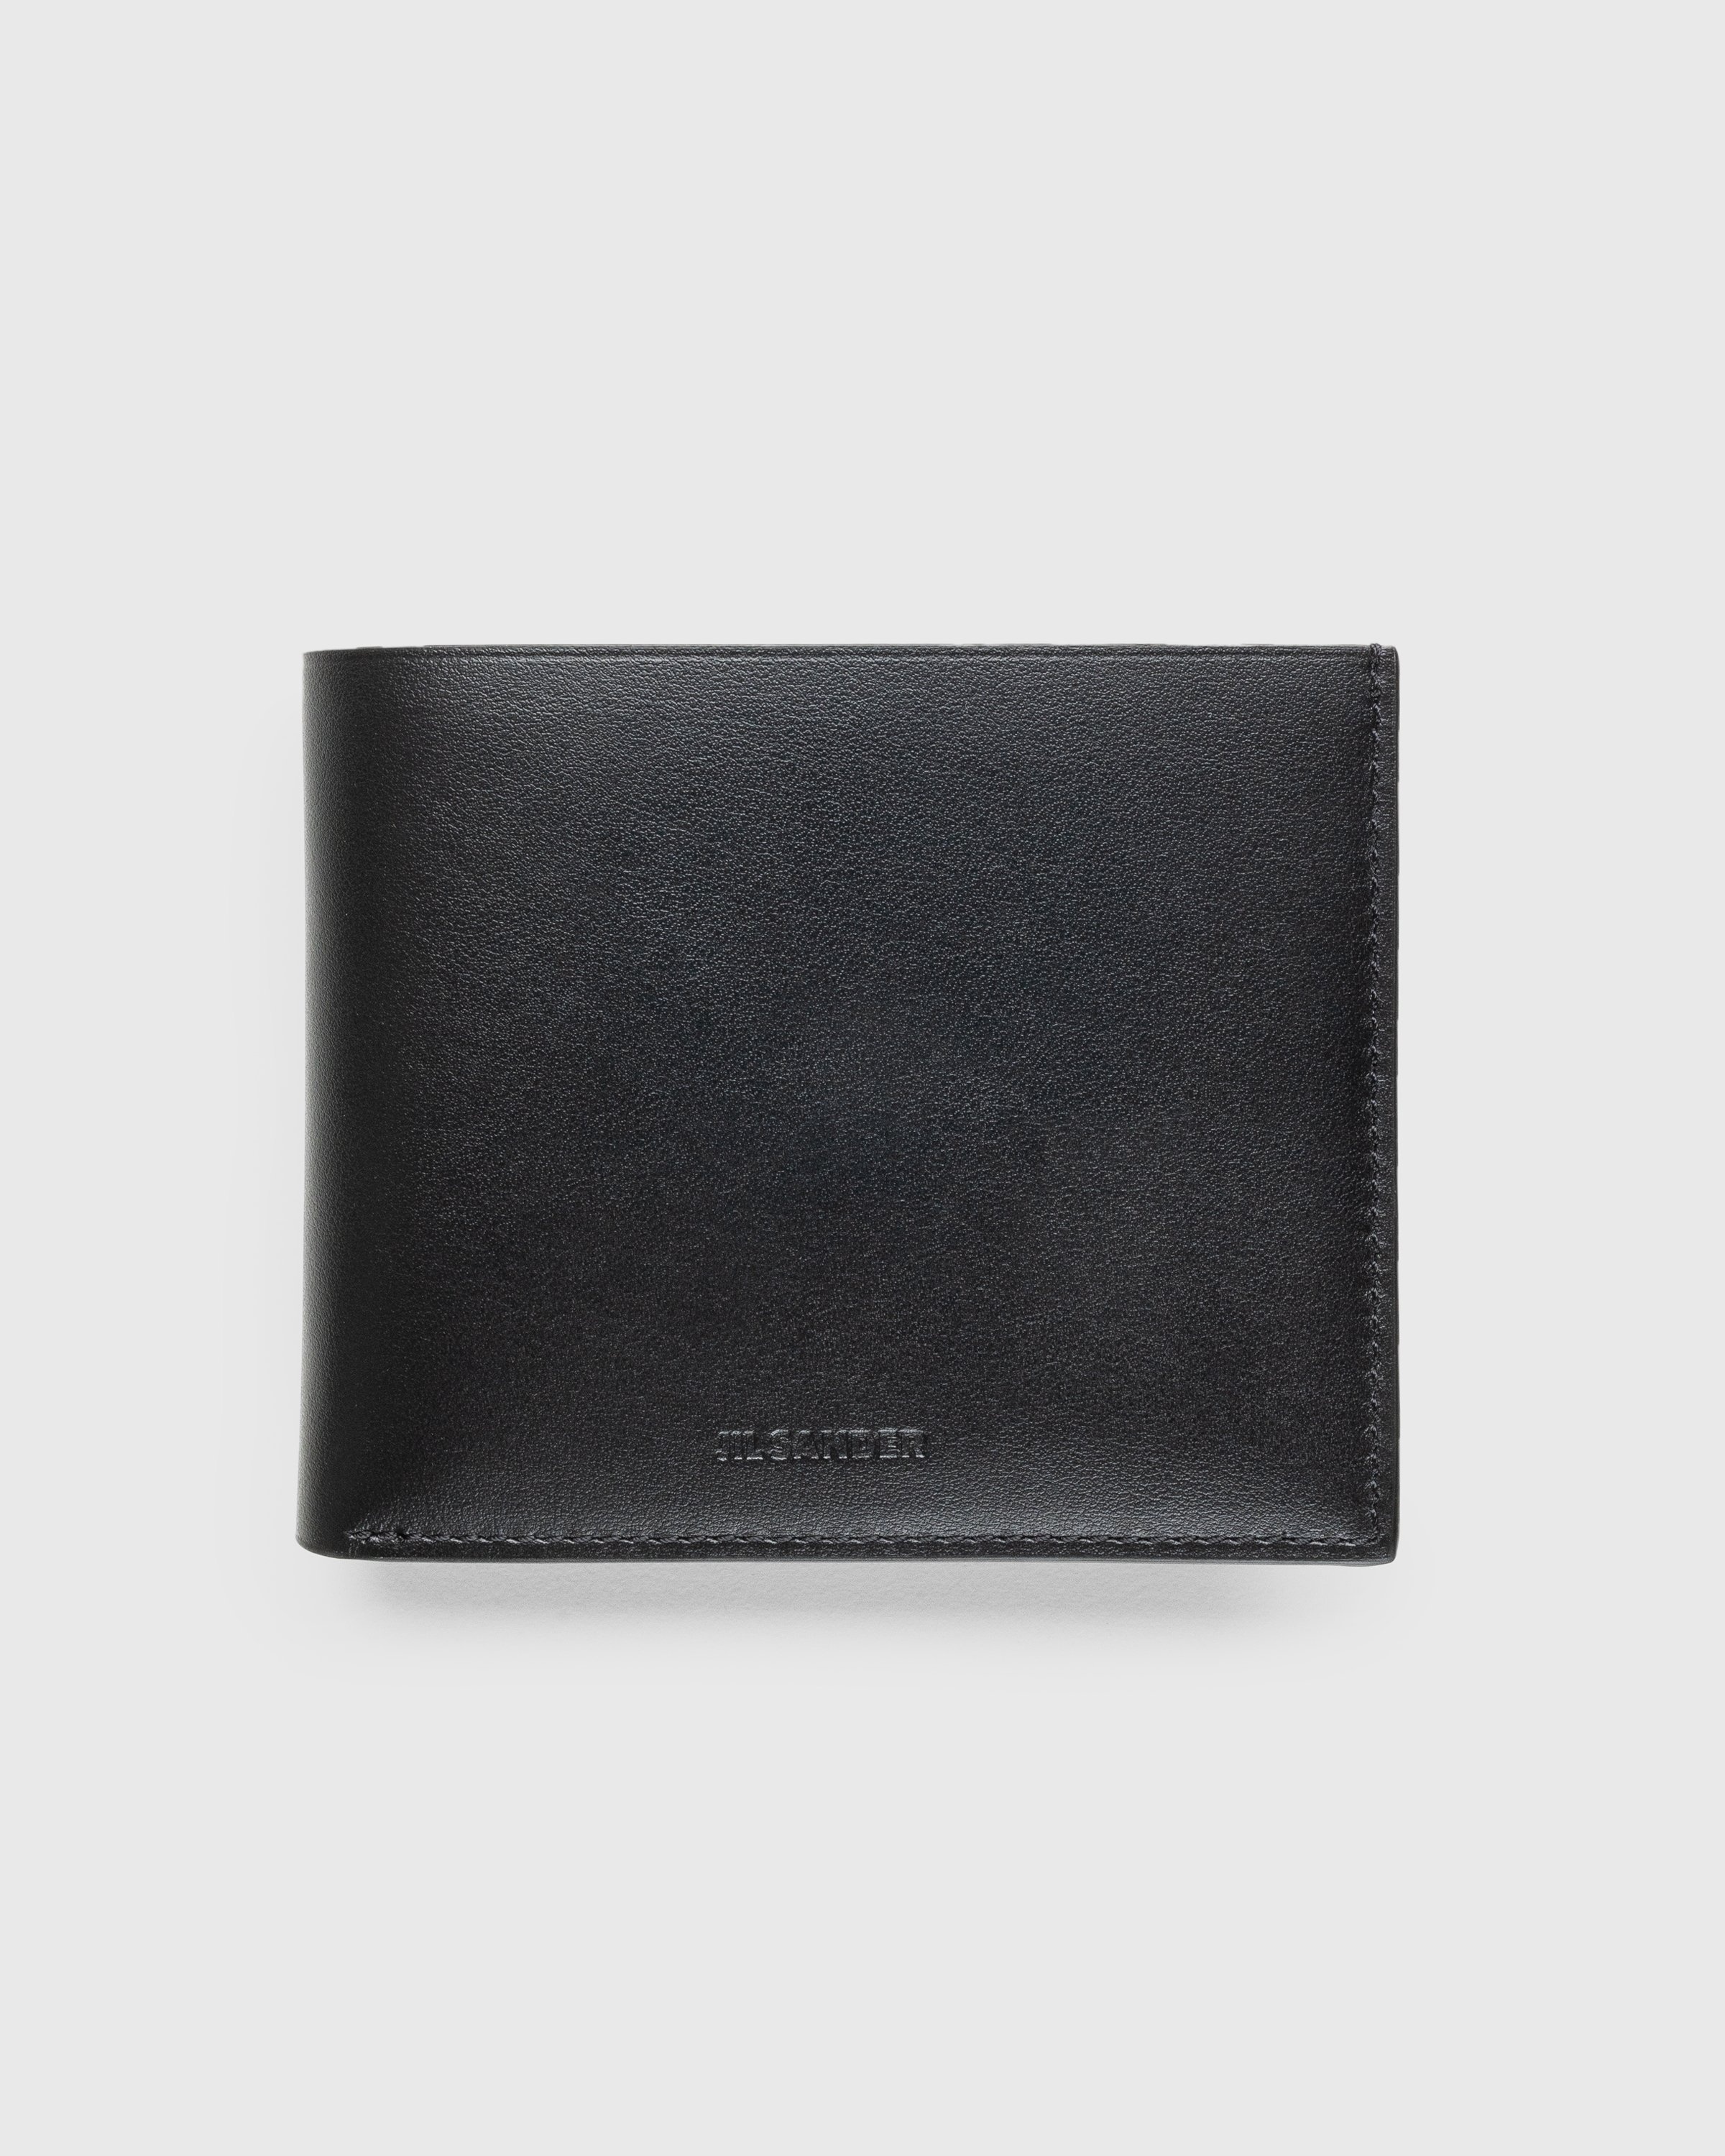 Jil Sander – Zip Pocket Wallet Black | Highsnobiety Shop